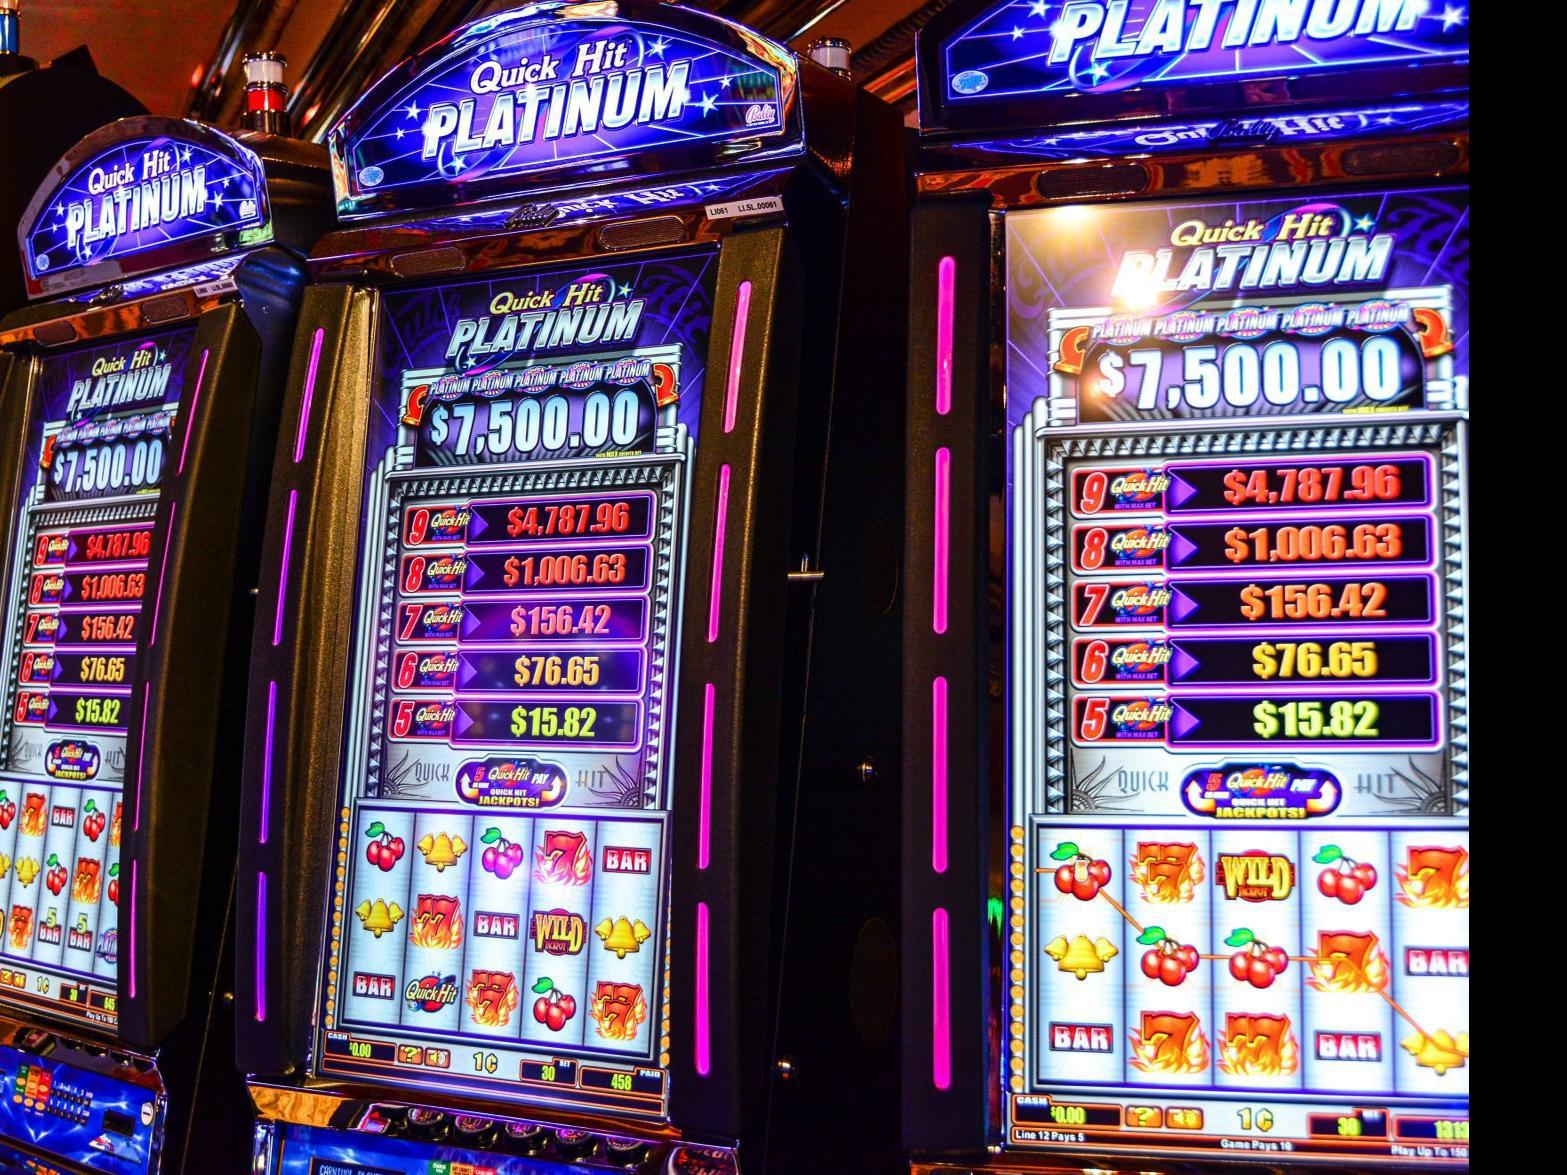 2019 Double Top Dollar Slot Machine Wins